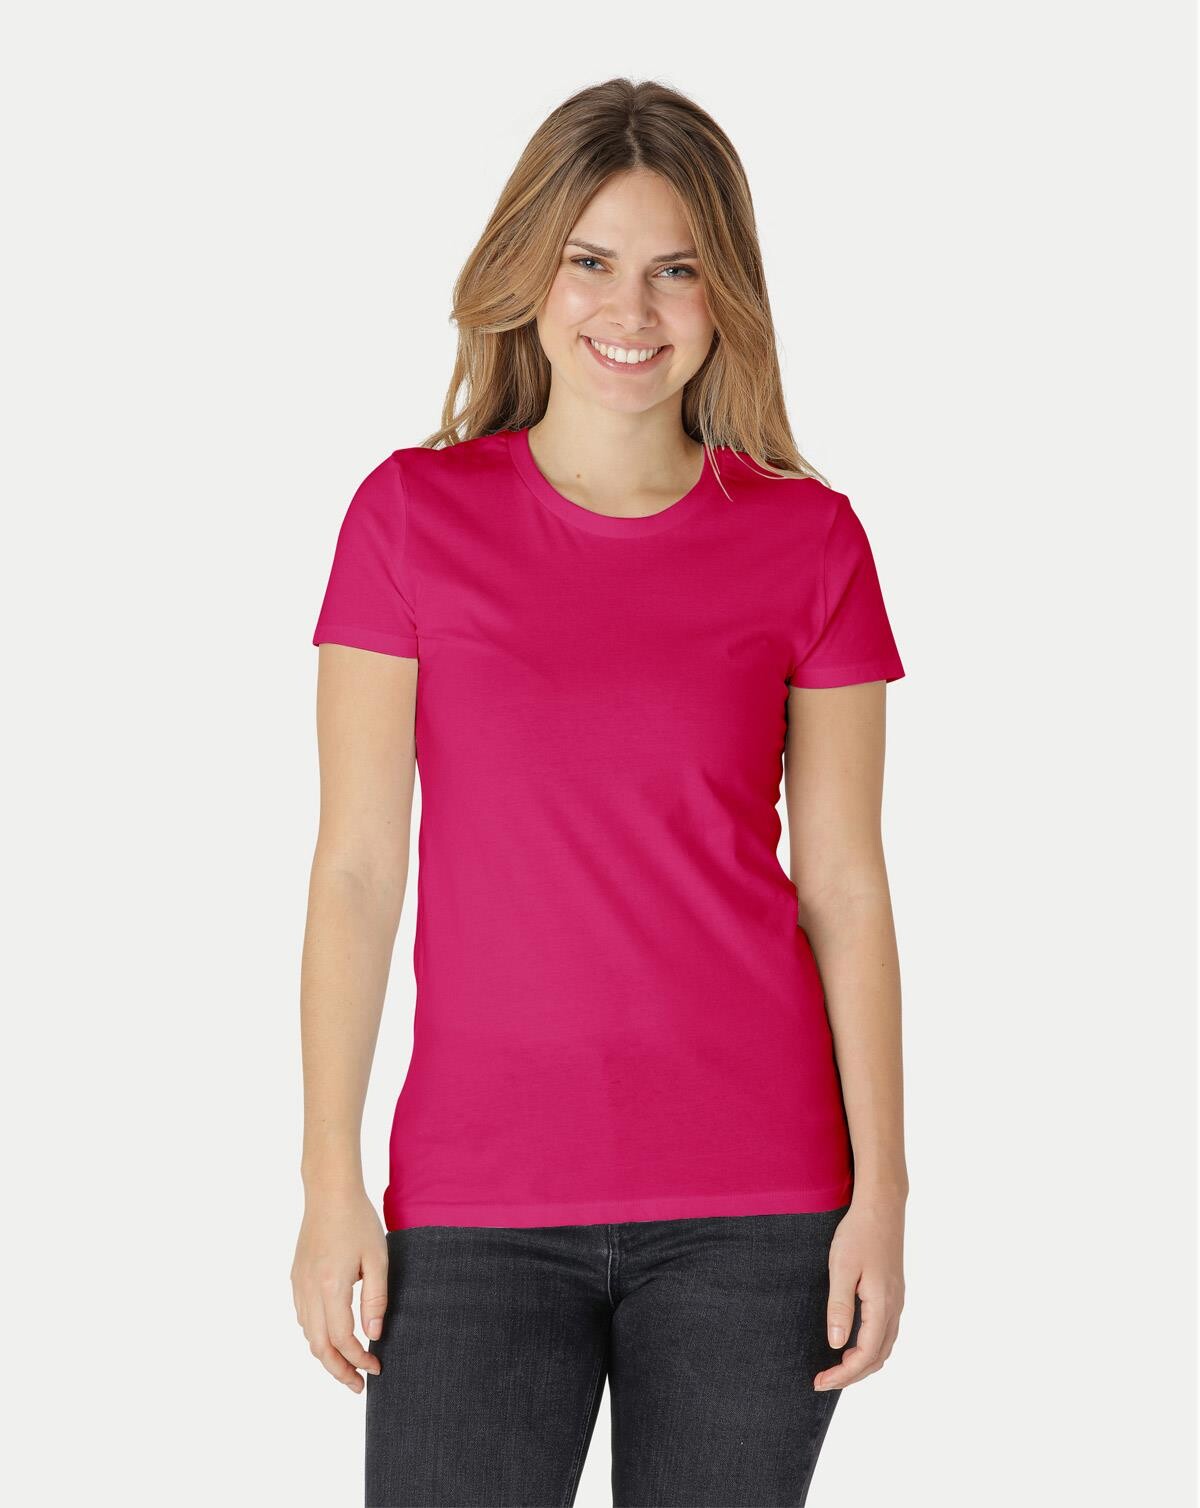 Neutral Økologisk Dame Tætsiddende T-Shirt (Pink, 2XL)